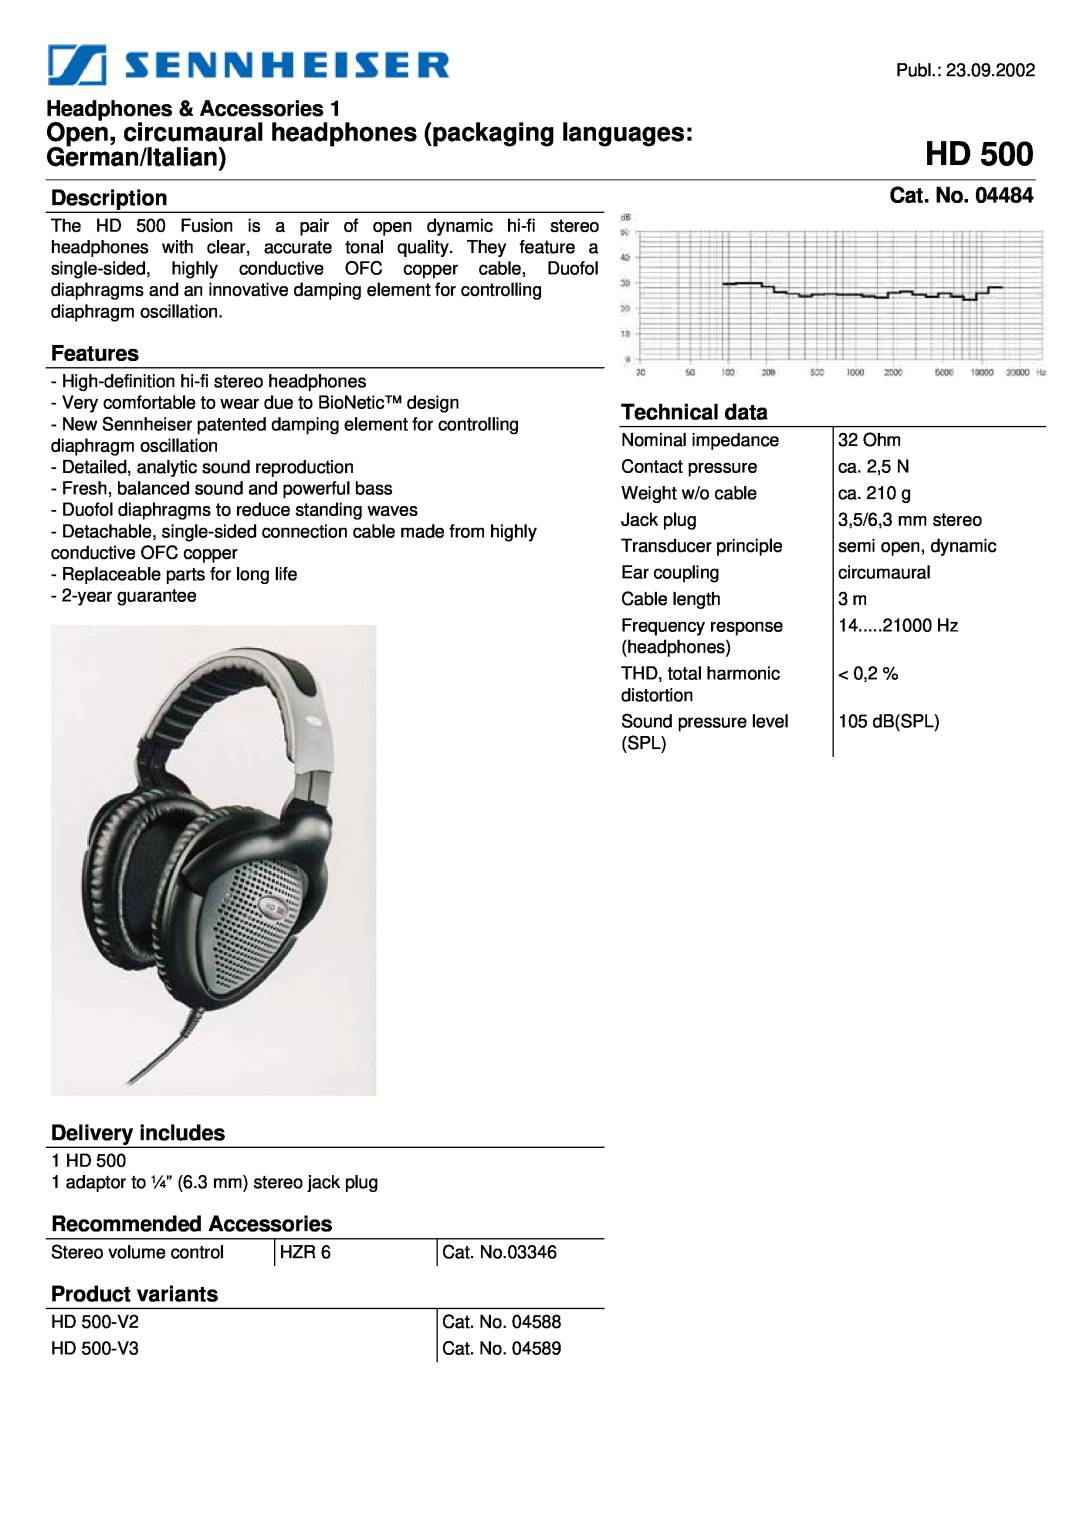 Sennheiser 04484 manual Headphones & Accessories, Description, Features, Technical data, Delivery includes, Cat. No 